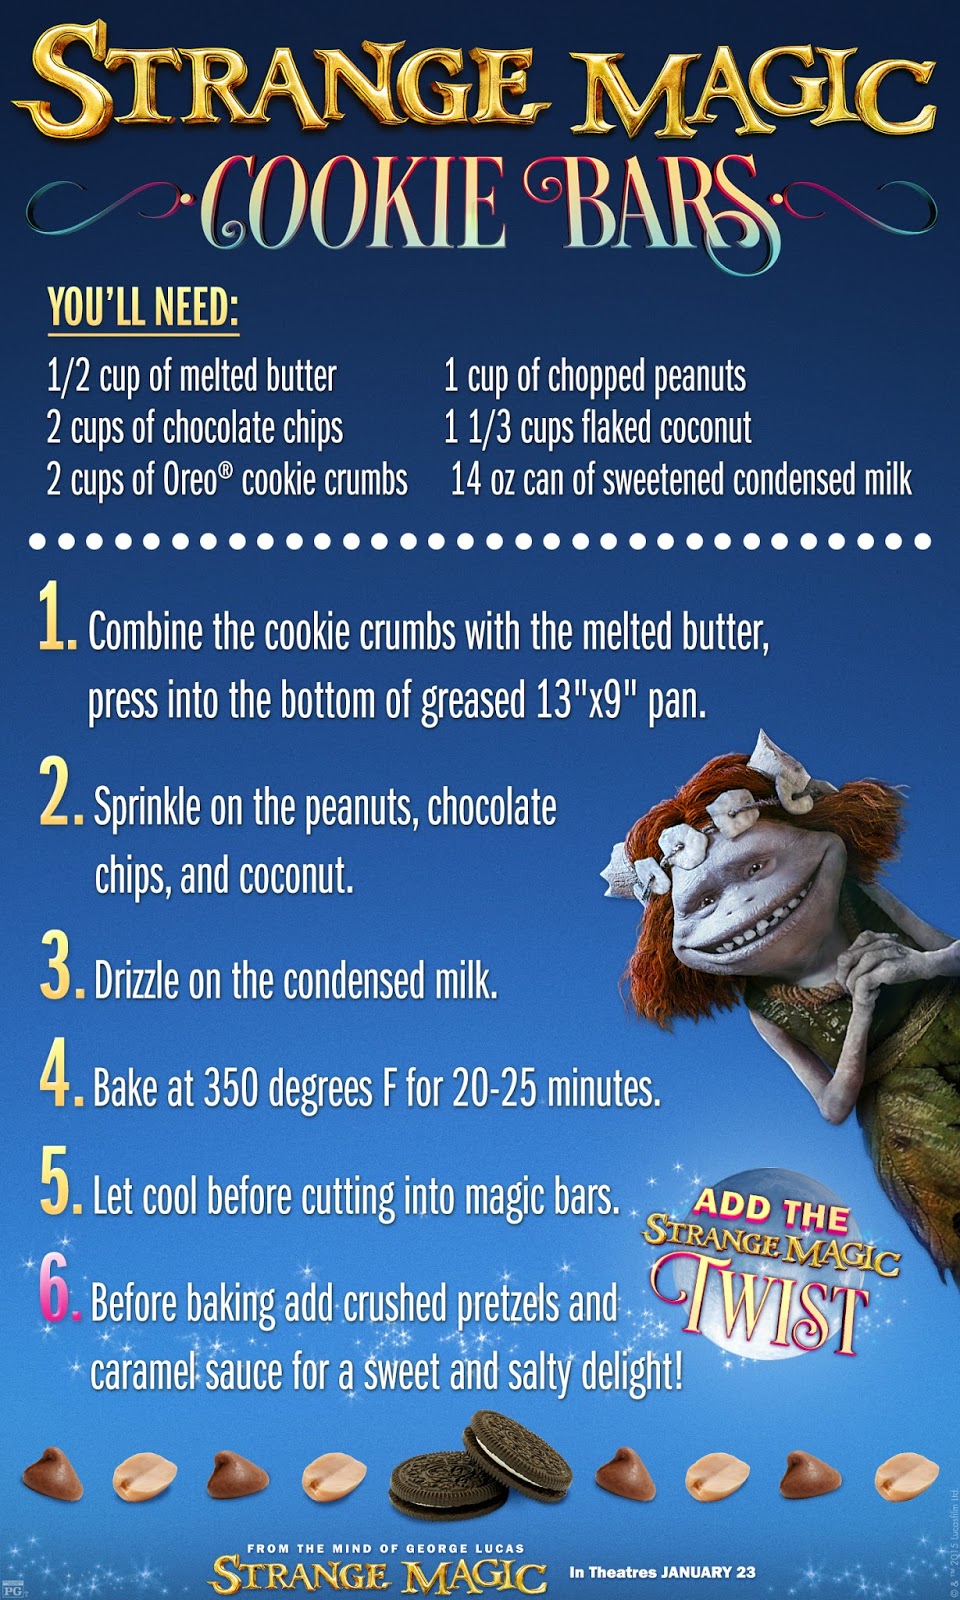 "Strange Magic" Cookie Bars Recipe Card Focused on the Magic Foodie Friday